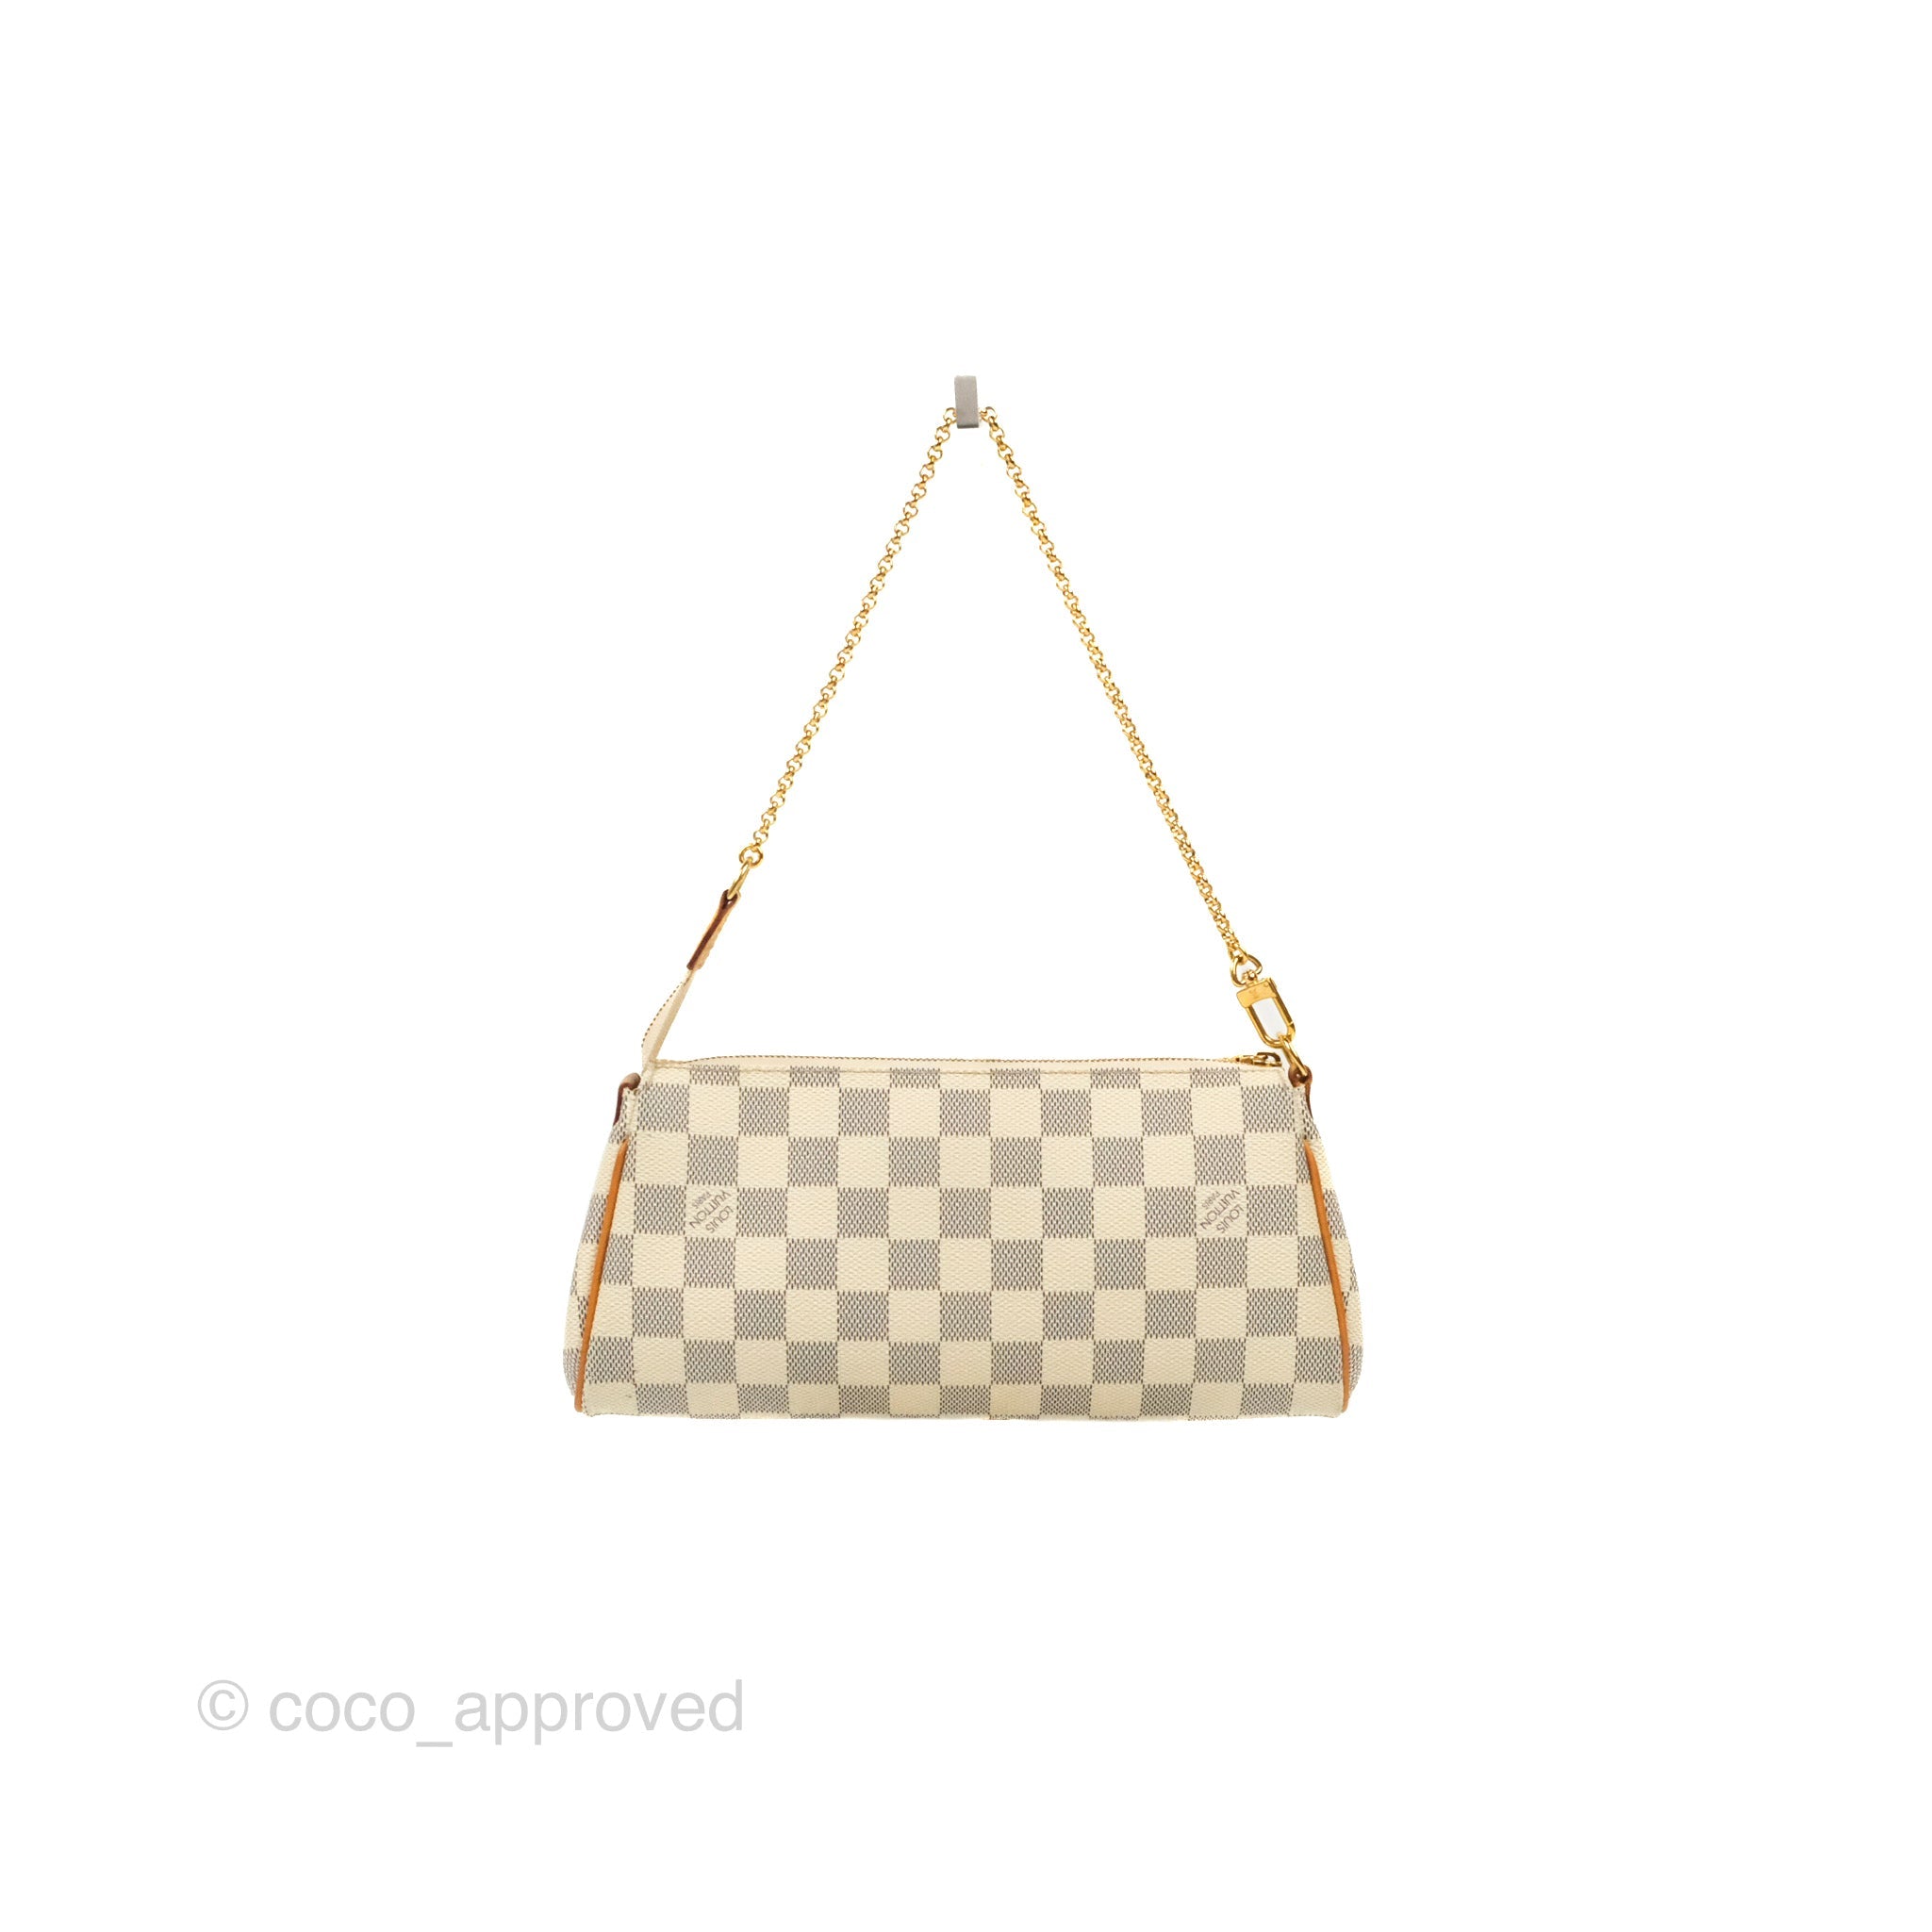 Best Louis Vuitton Monogram and Damier Small Crossbody Bags: Eva